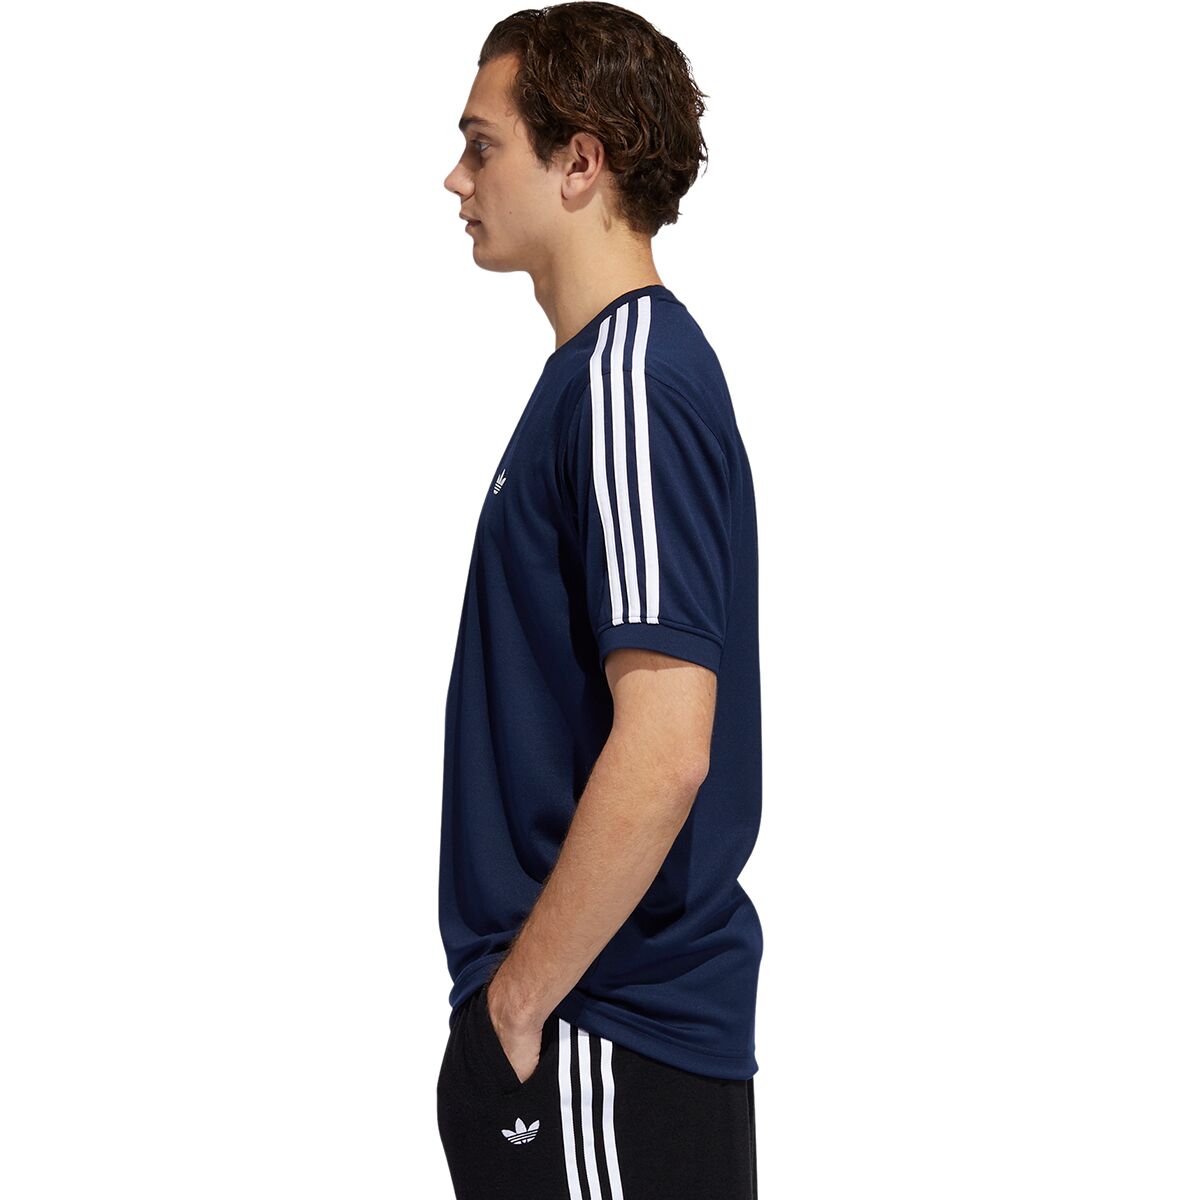 Adidas Aero Club Jersey - Men's | eBay